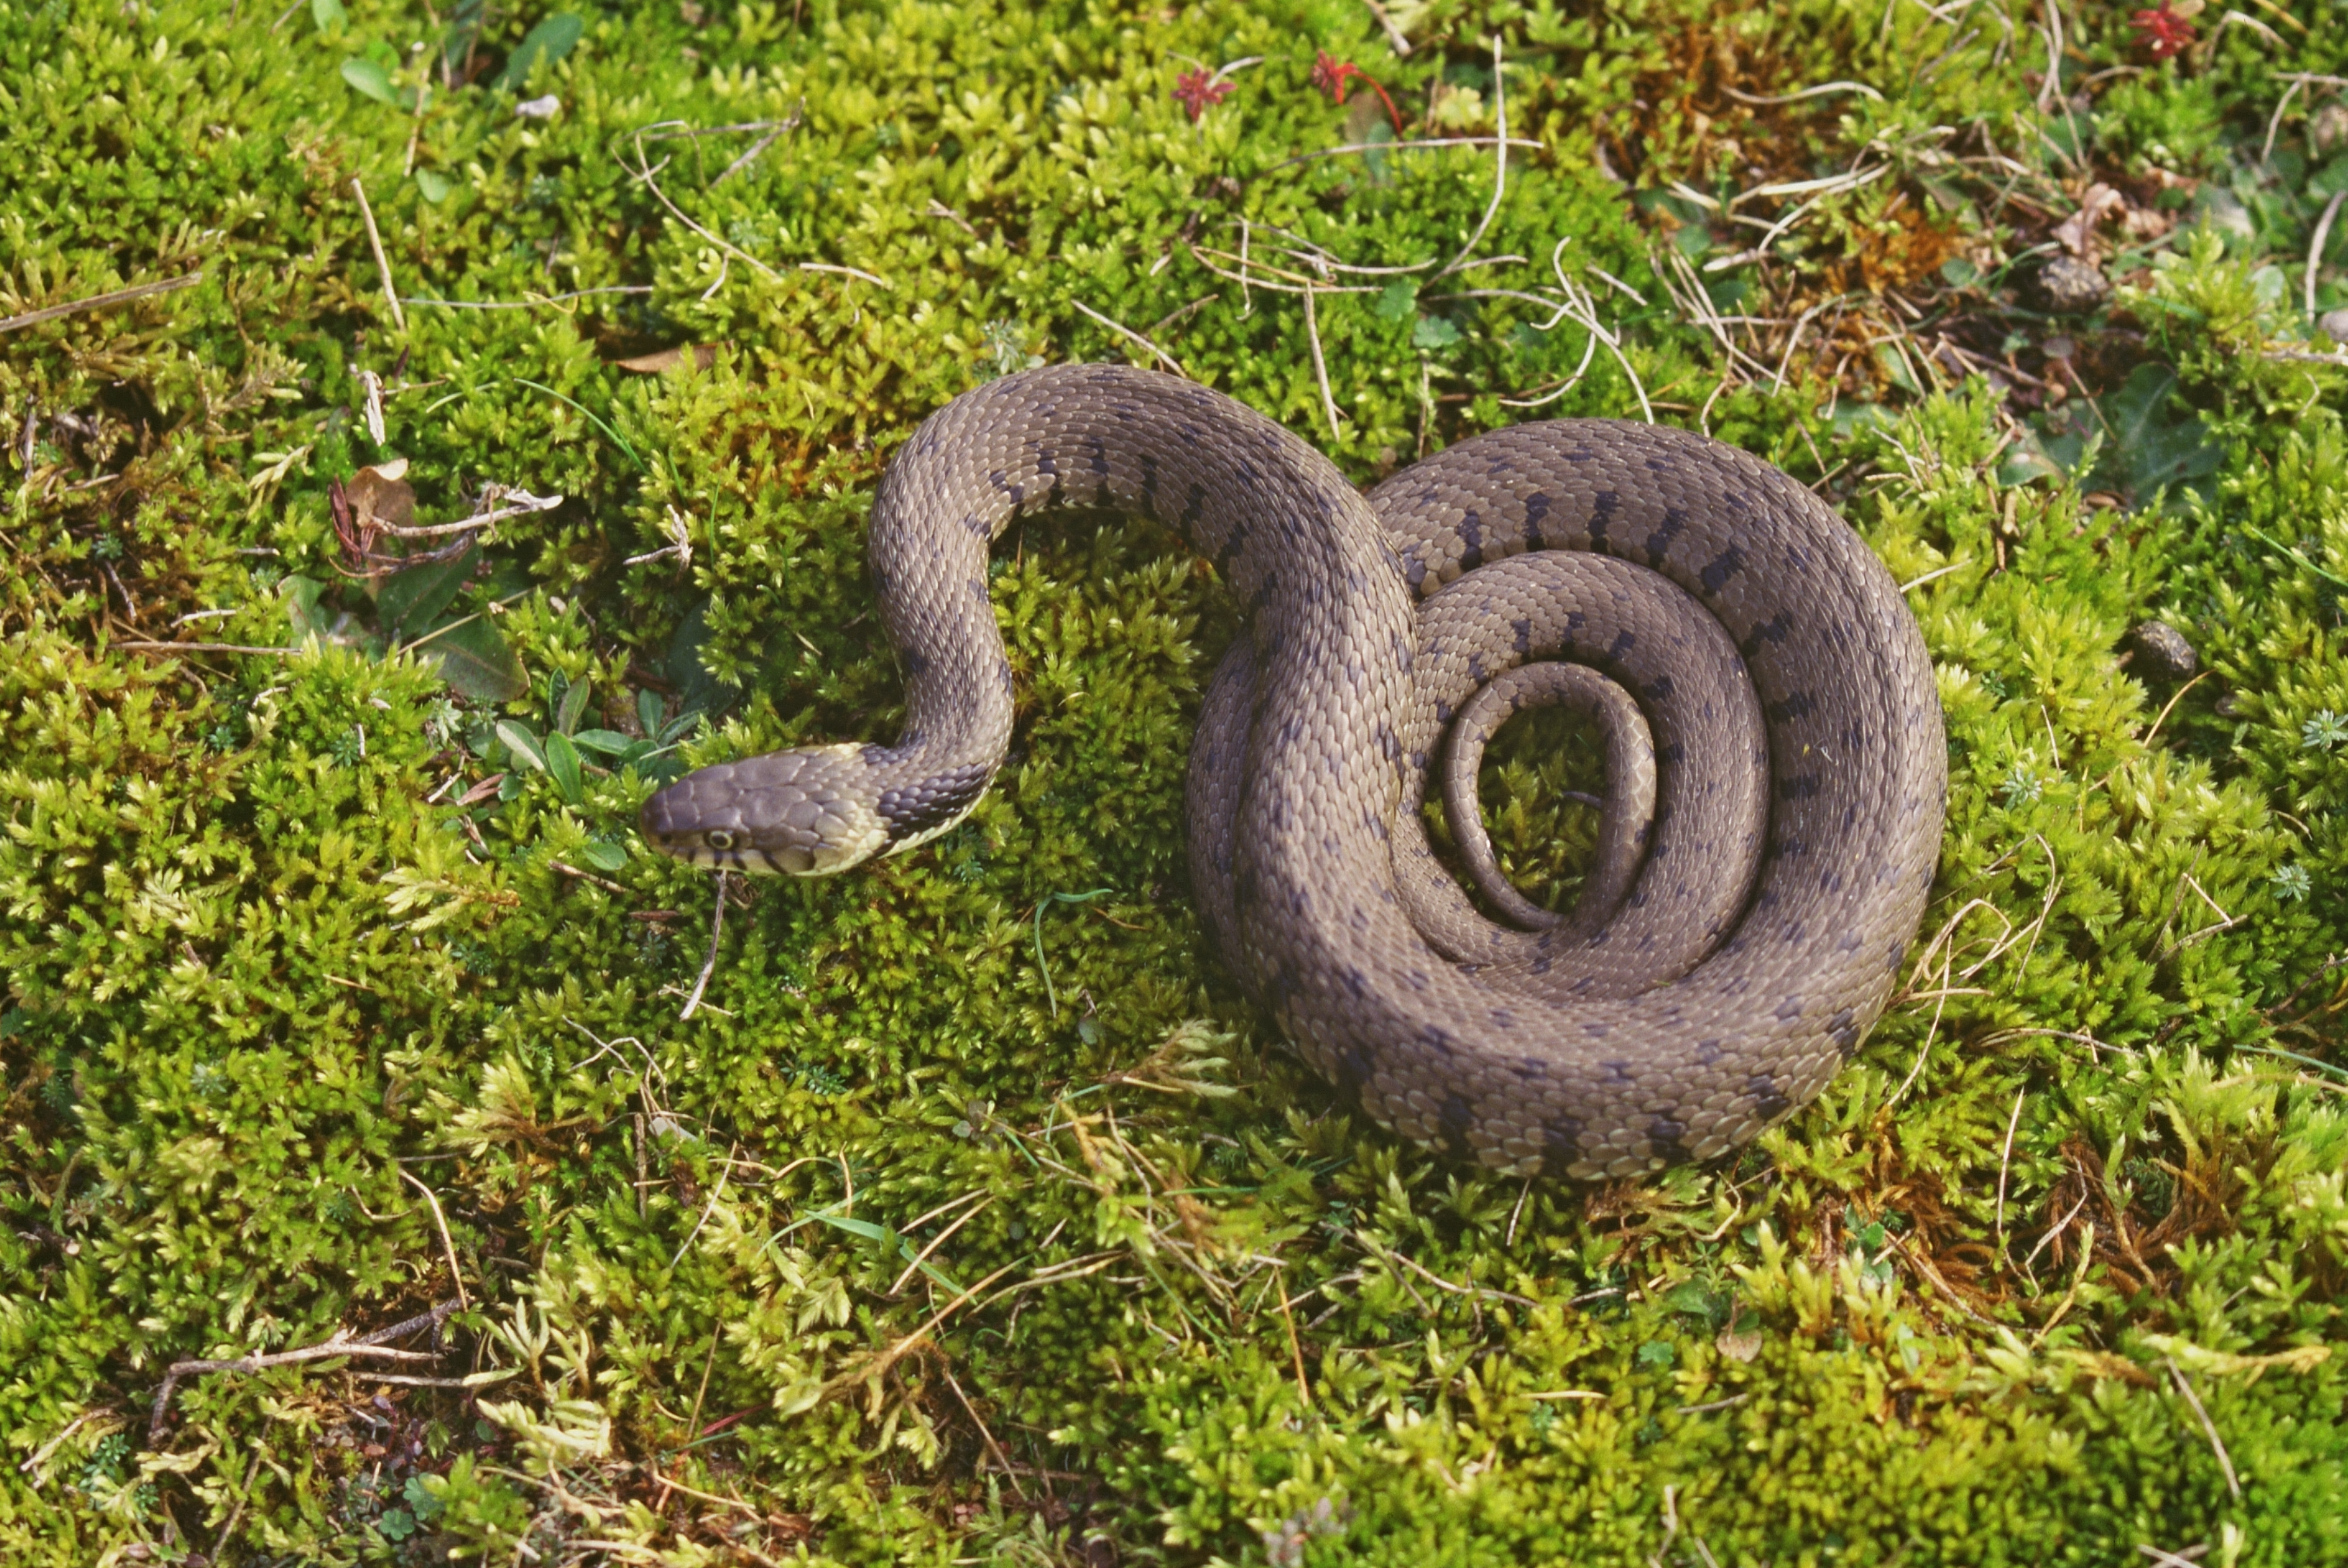 European Grass Snake 4k Ultra HD Wallpaper Background Image